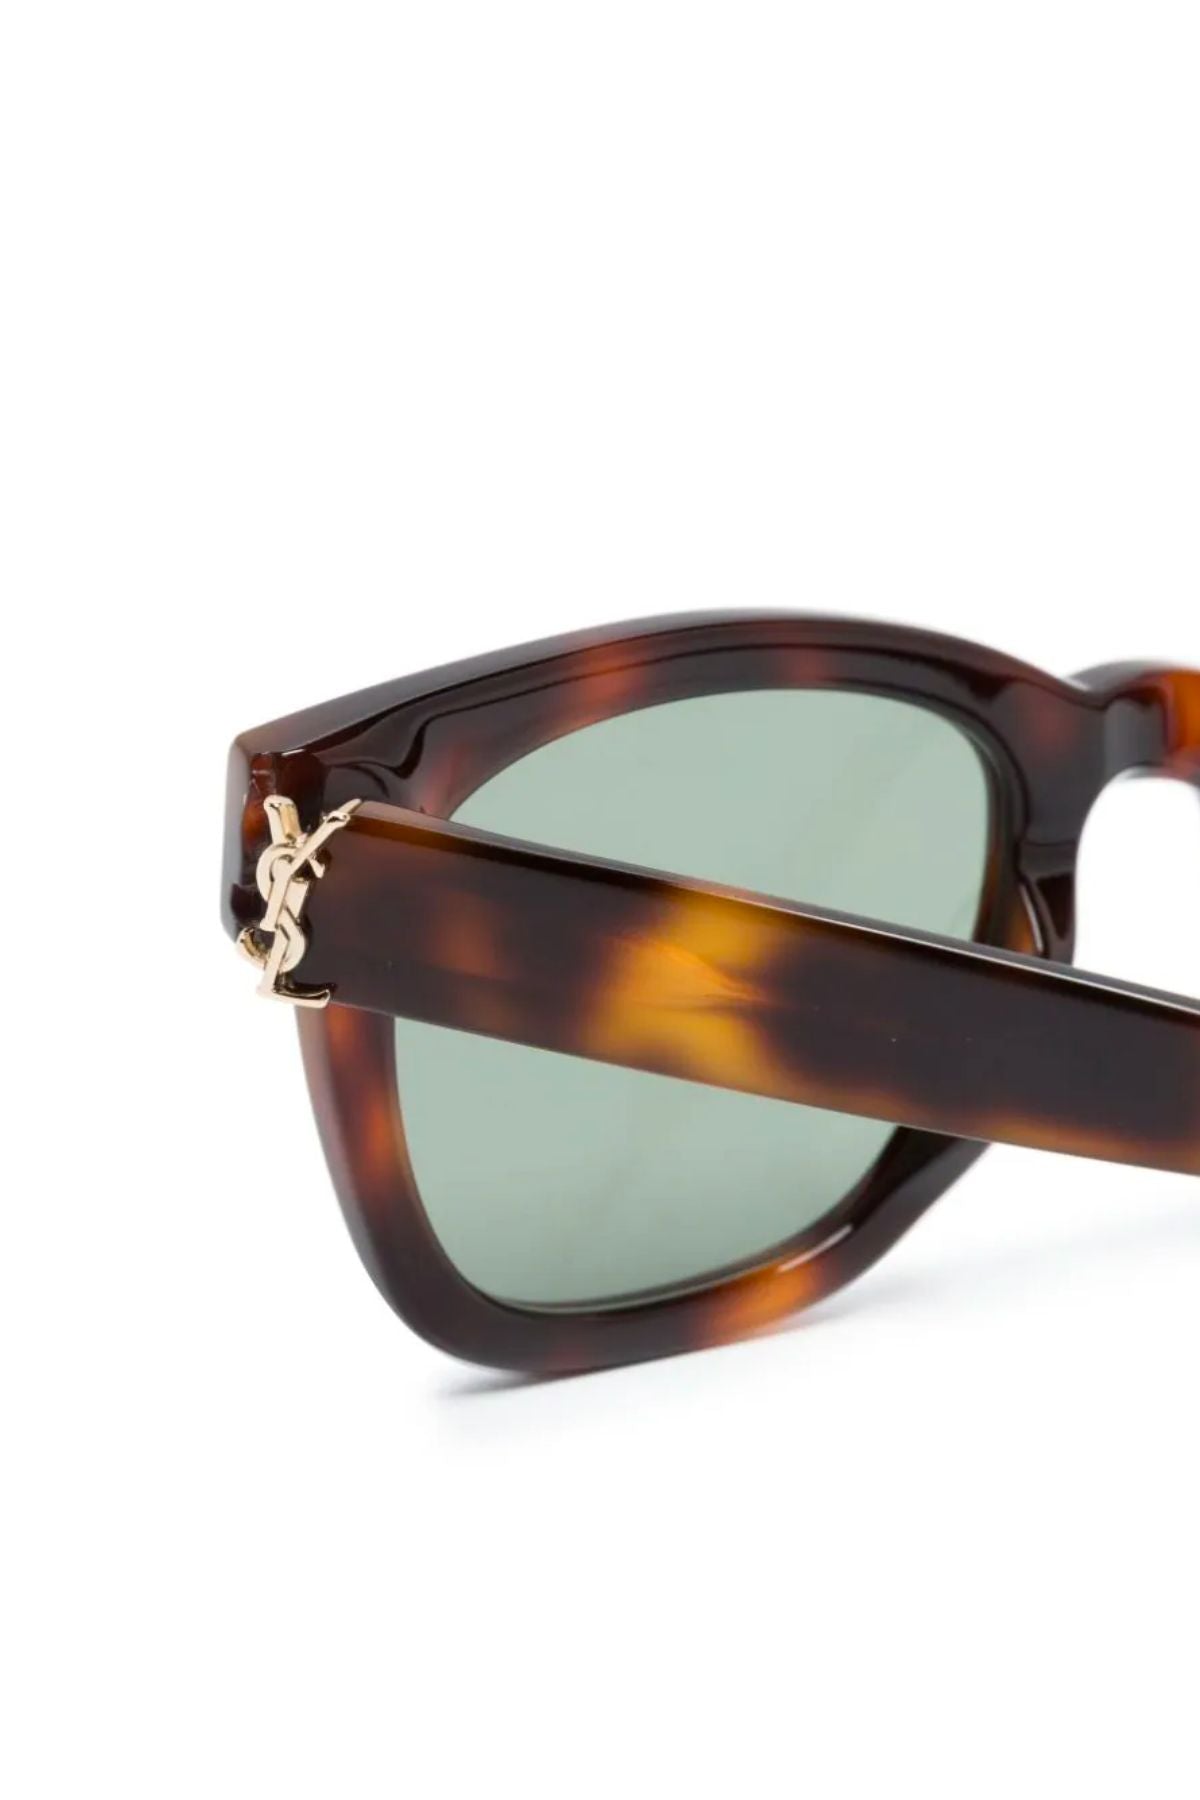 Saint Laurent Square Framed Sunglasses - Havana